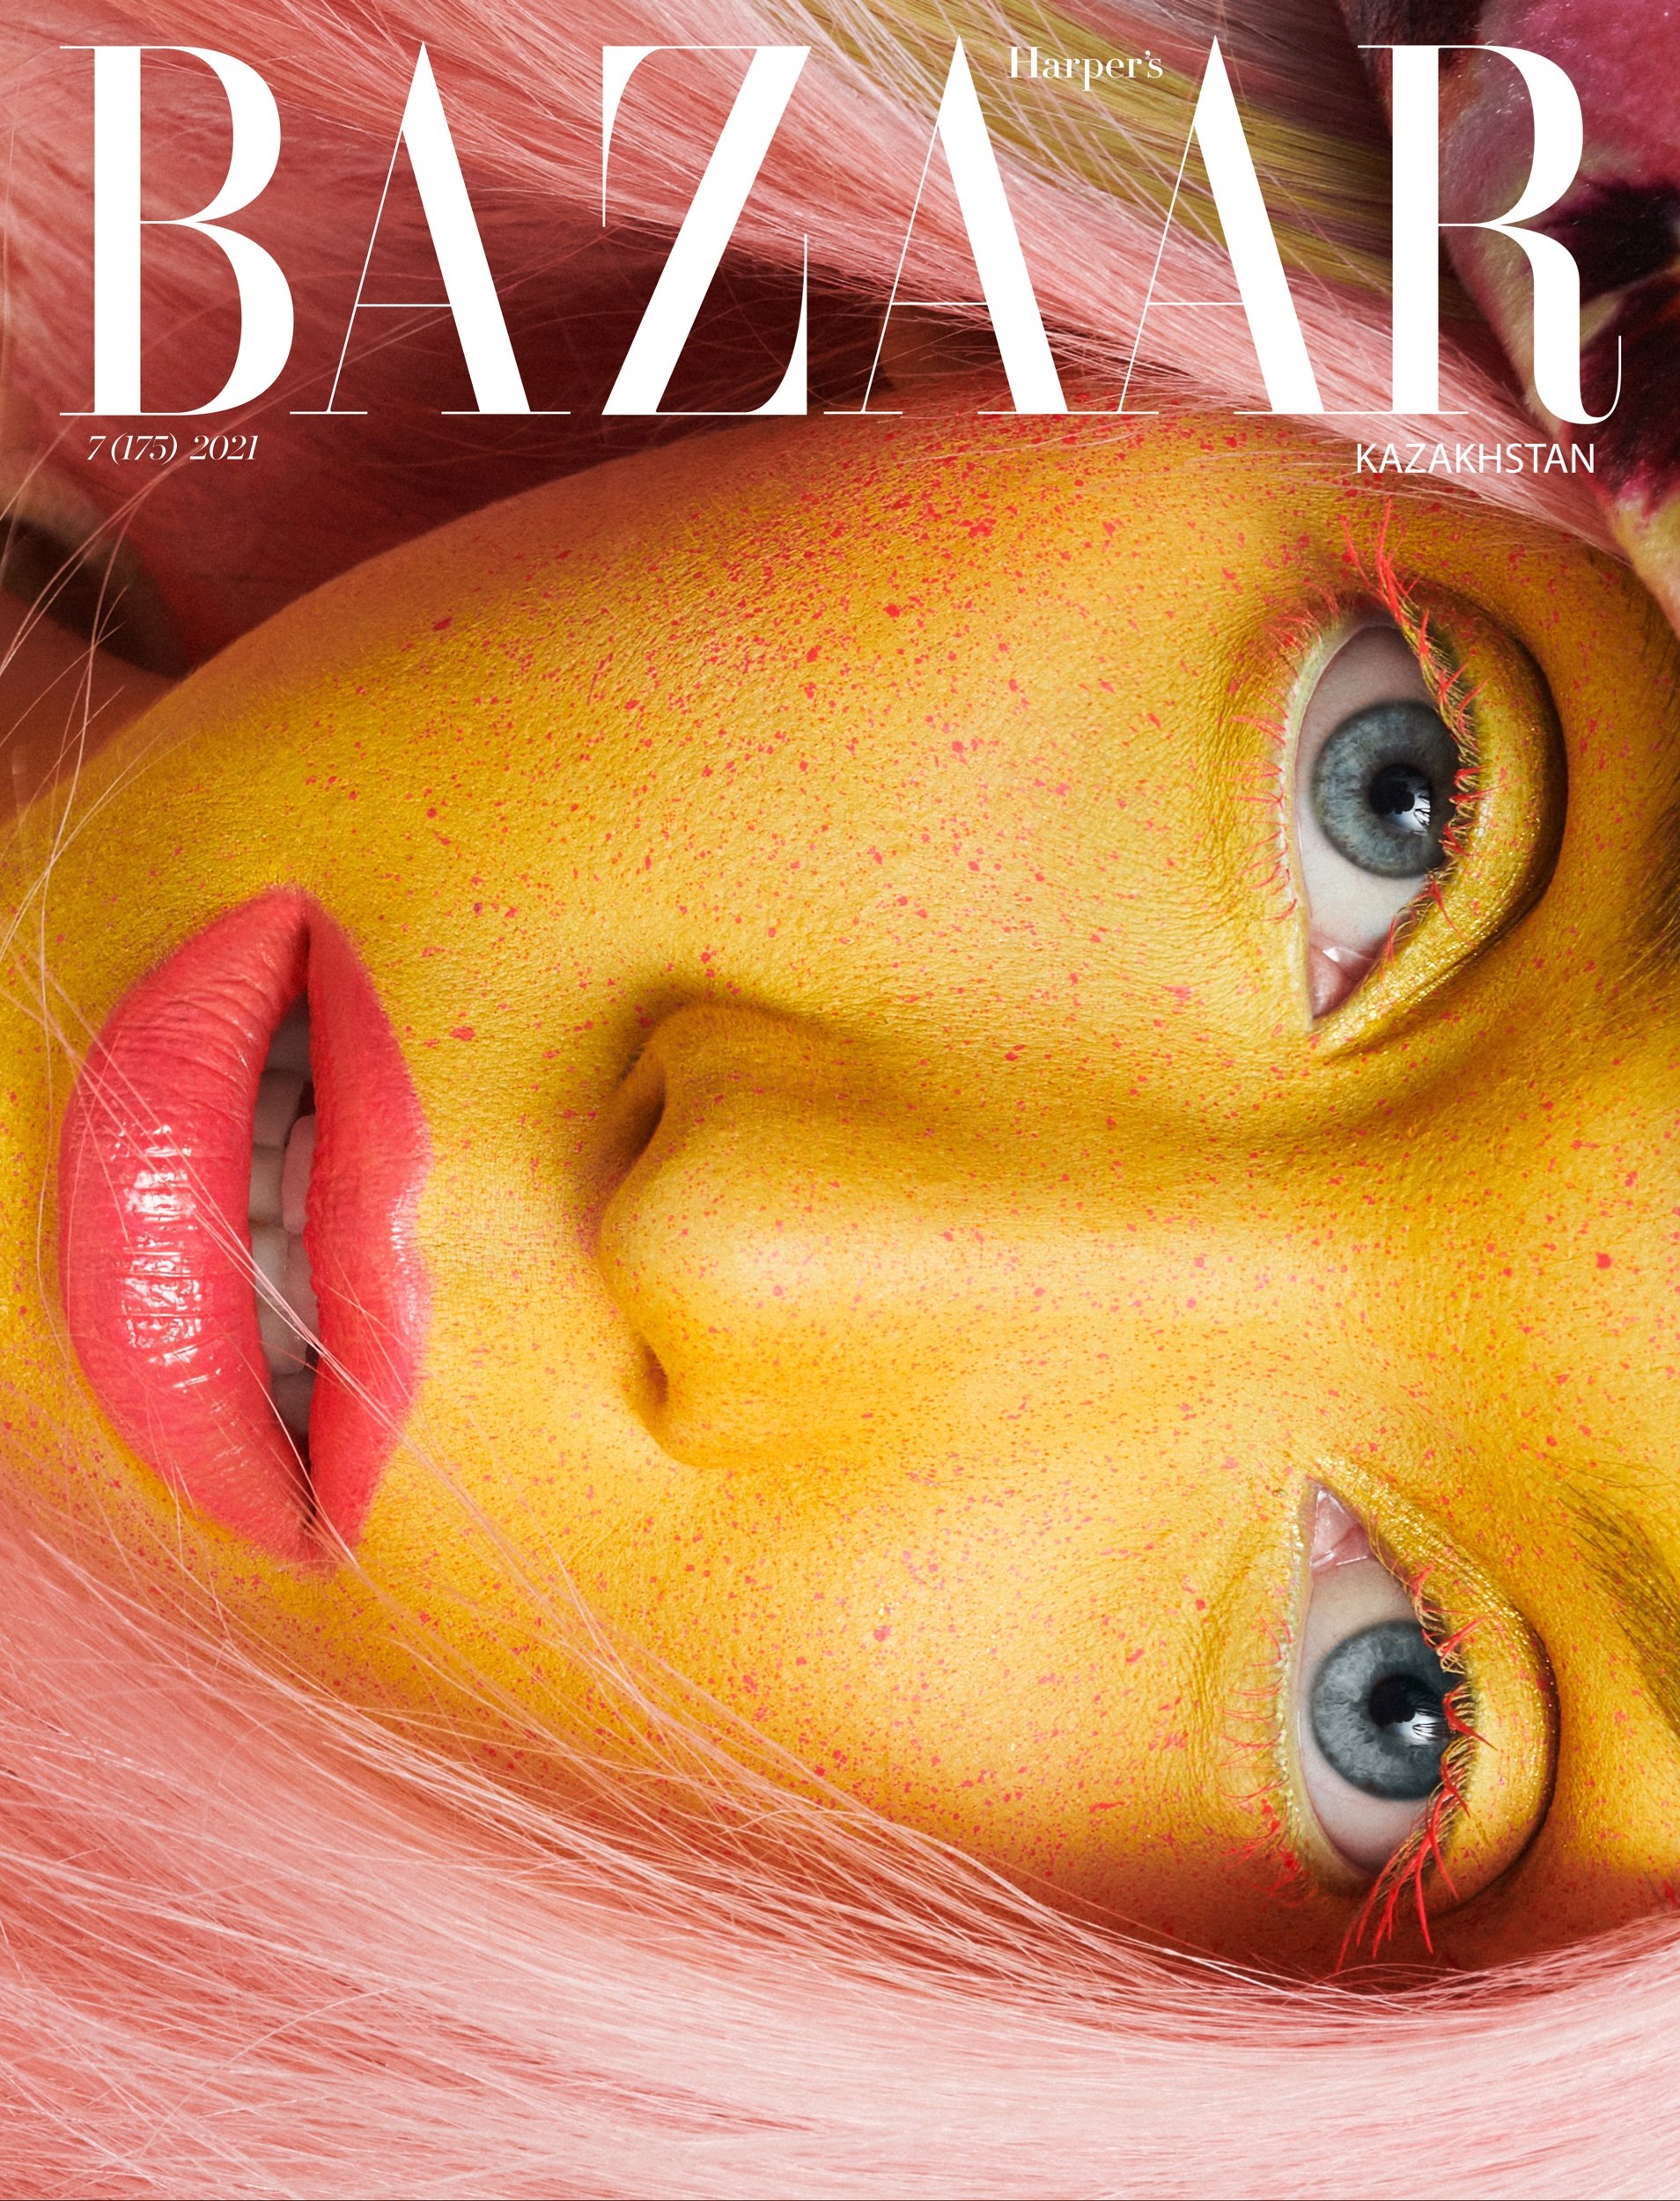 Harper’s Bazzar Beauty Cover 